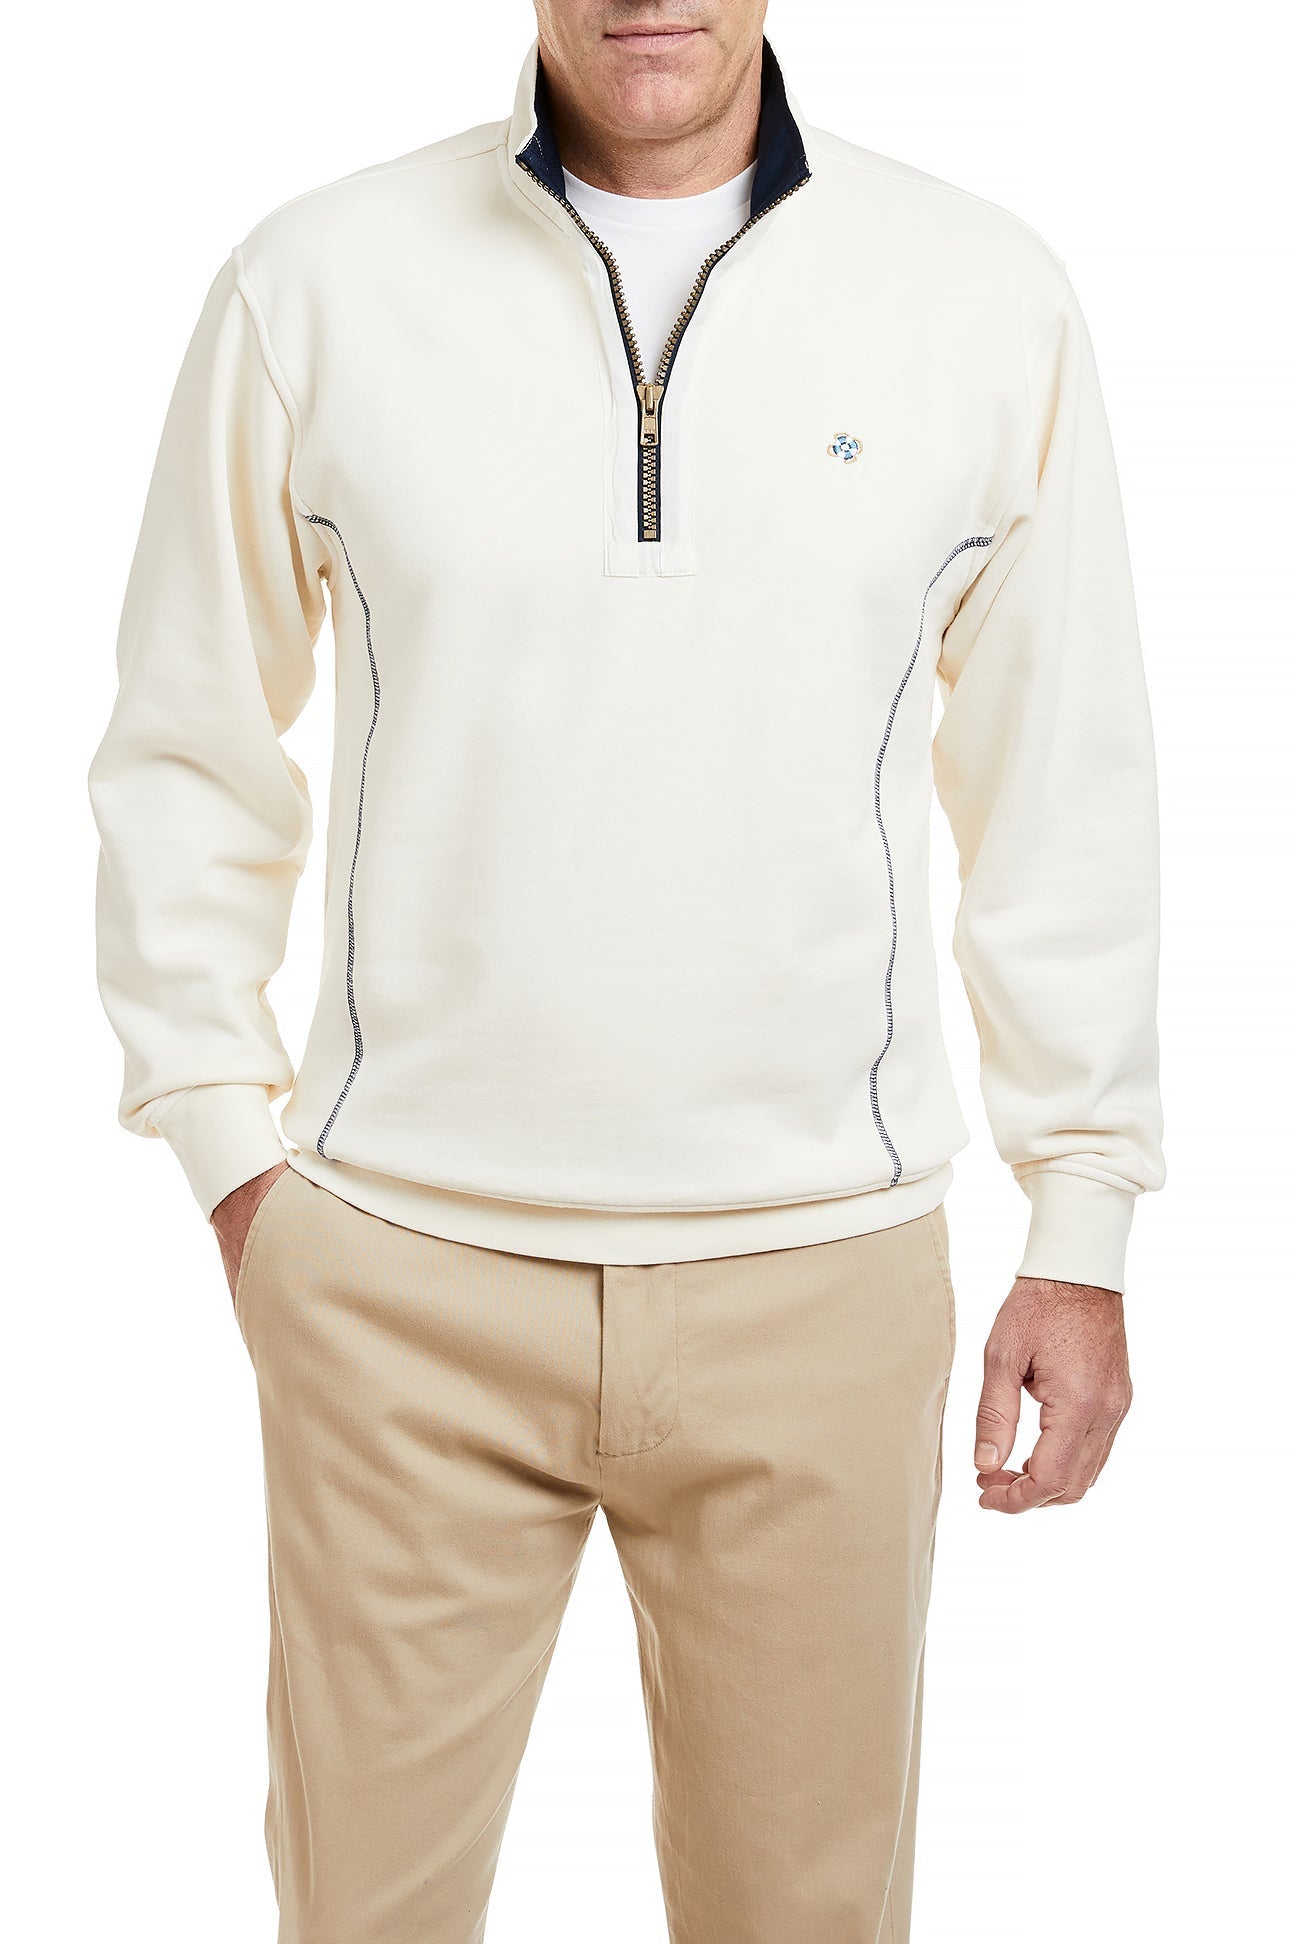 White Quarter-Zip Sweatshirts for Men